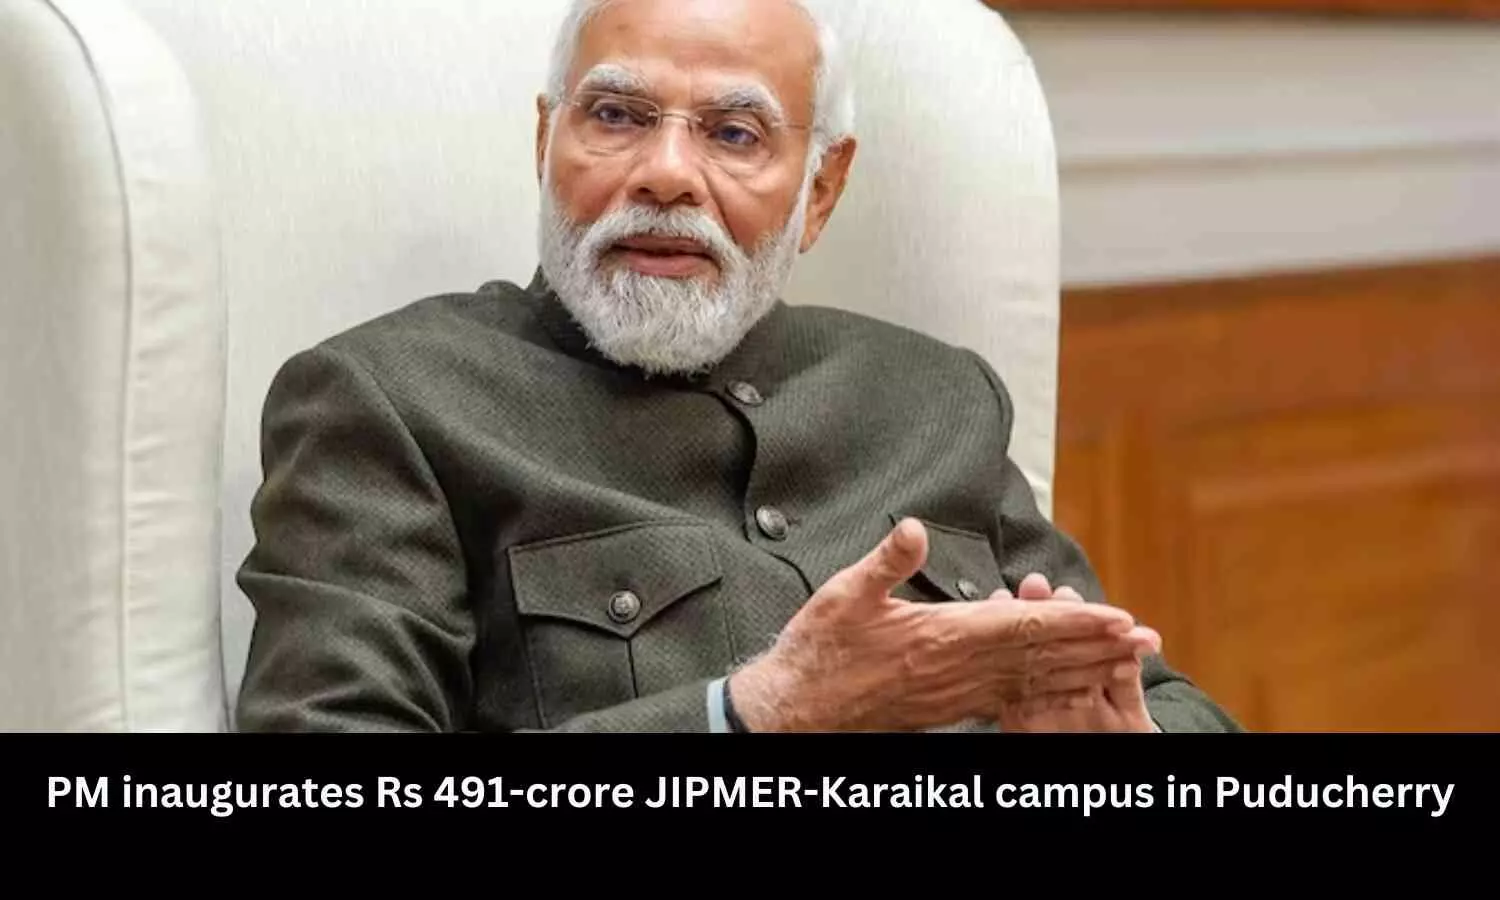 PM Modi inaugurates Karaikal campus of JIPMER